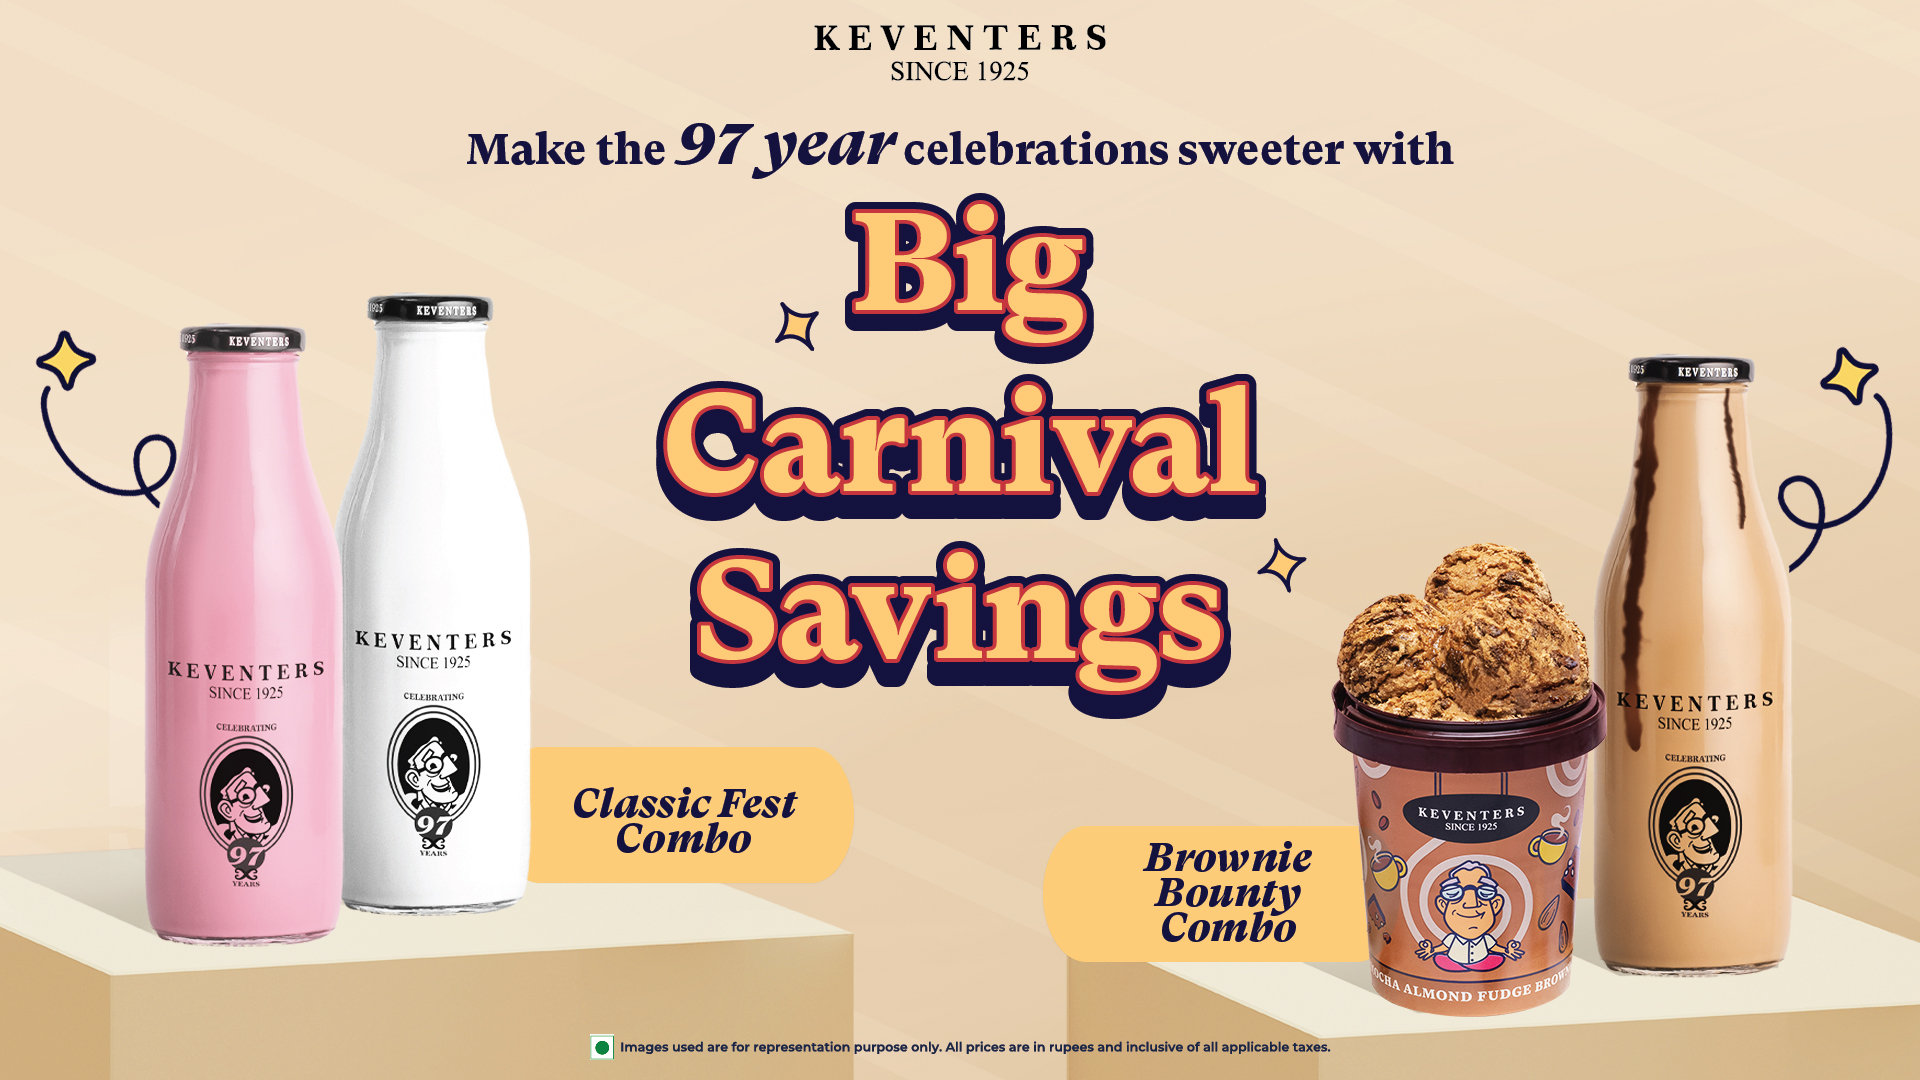 Keventers Big Carnival Savings